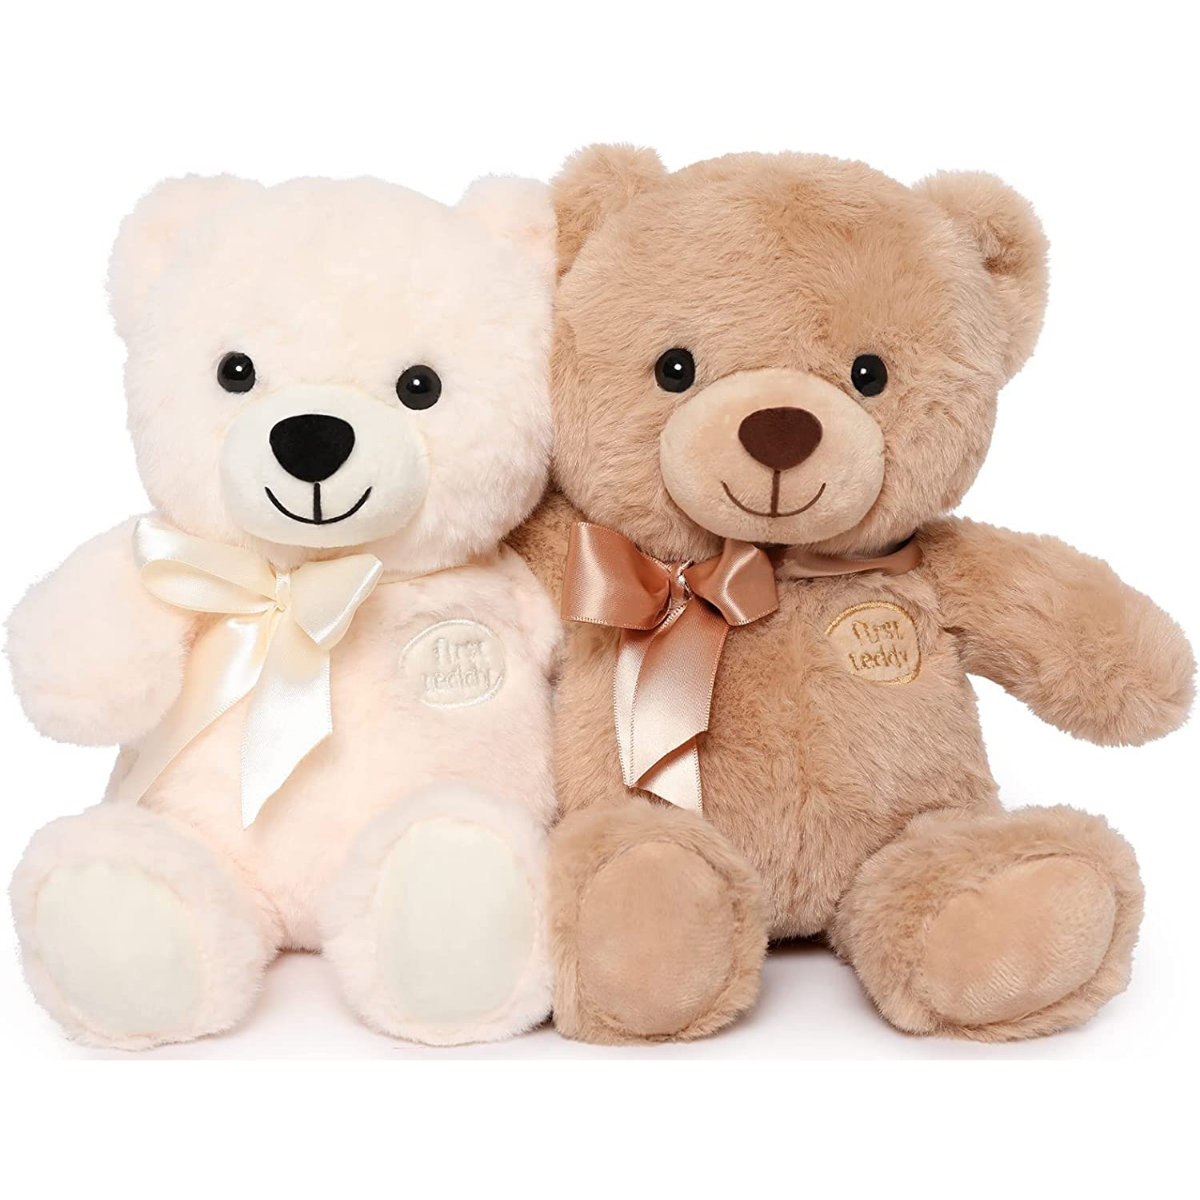 morismos 3 packs teddy bear stuffed animals plush